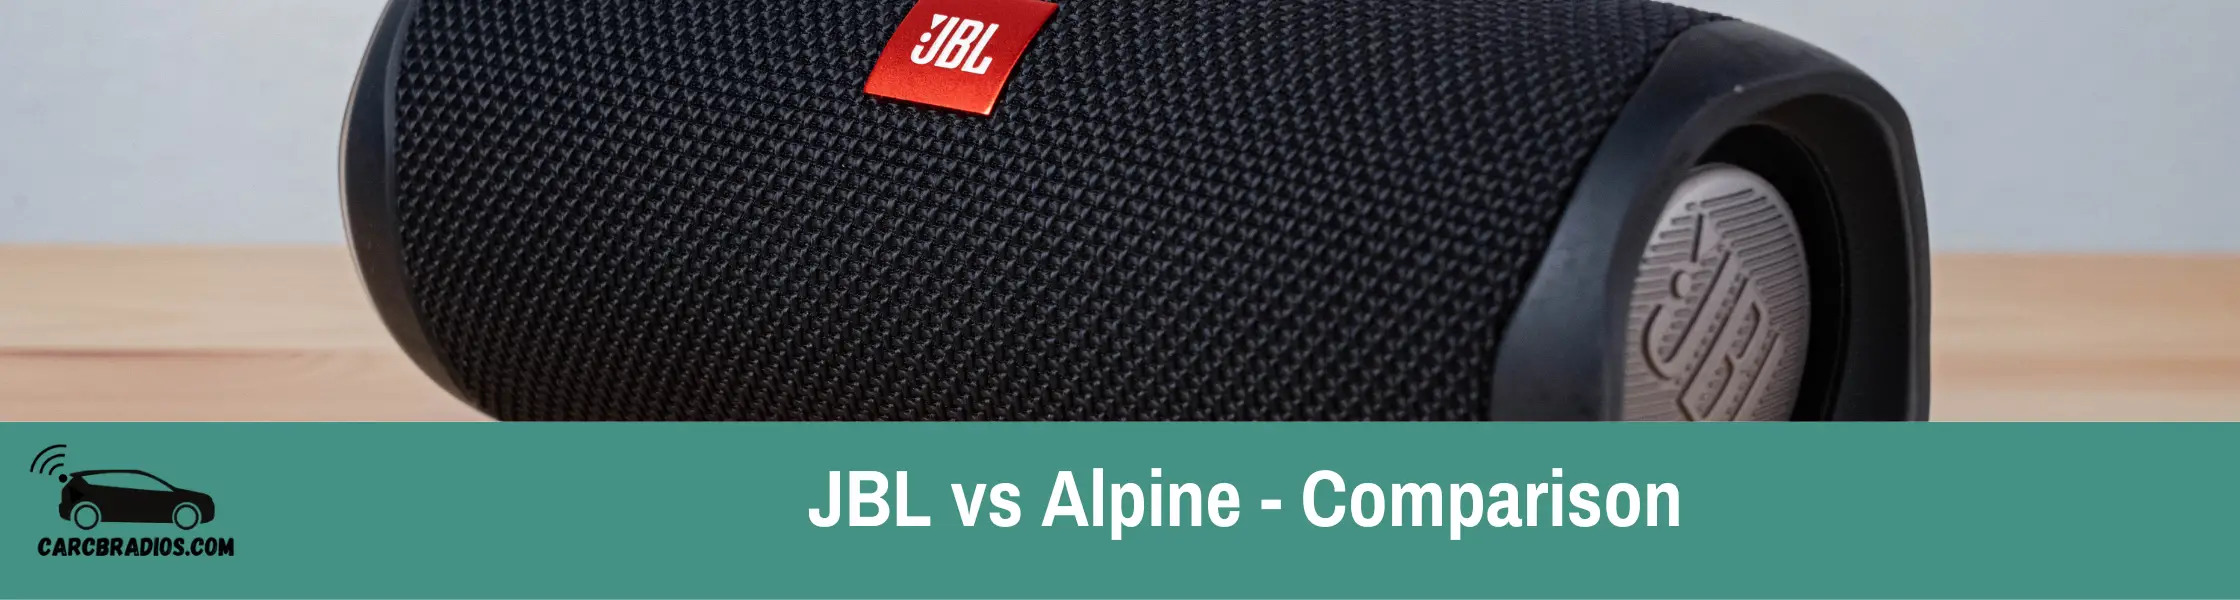 JBL vs Alpine - Comparison